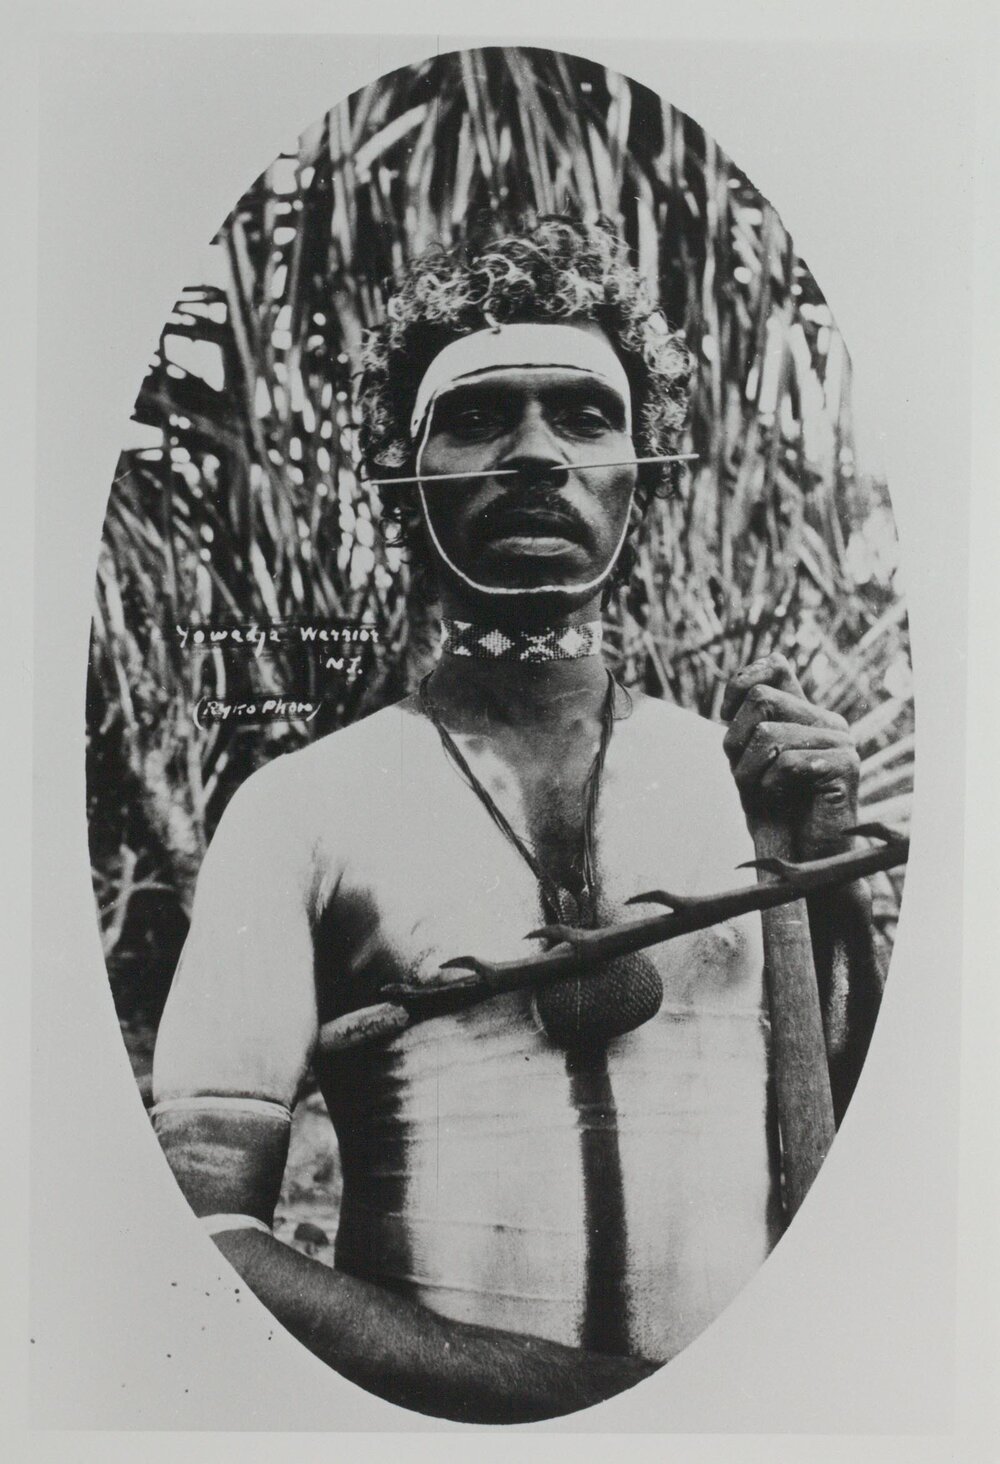 "Yowadja" warrior N.T. "Iwaidja" man, decorated with body paint. Photo 5